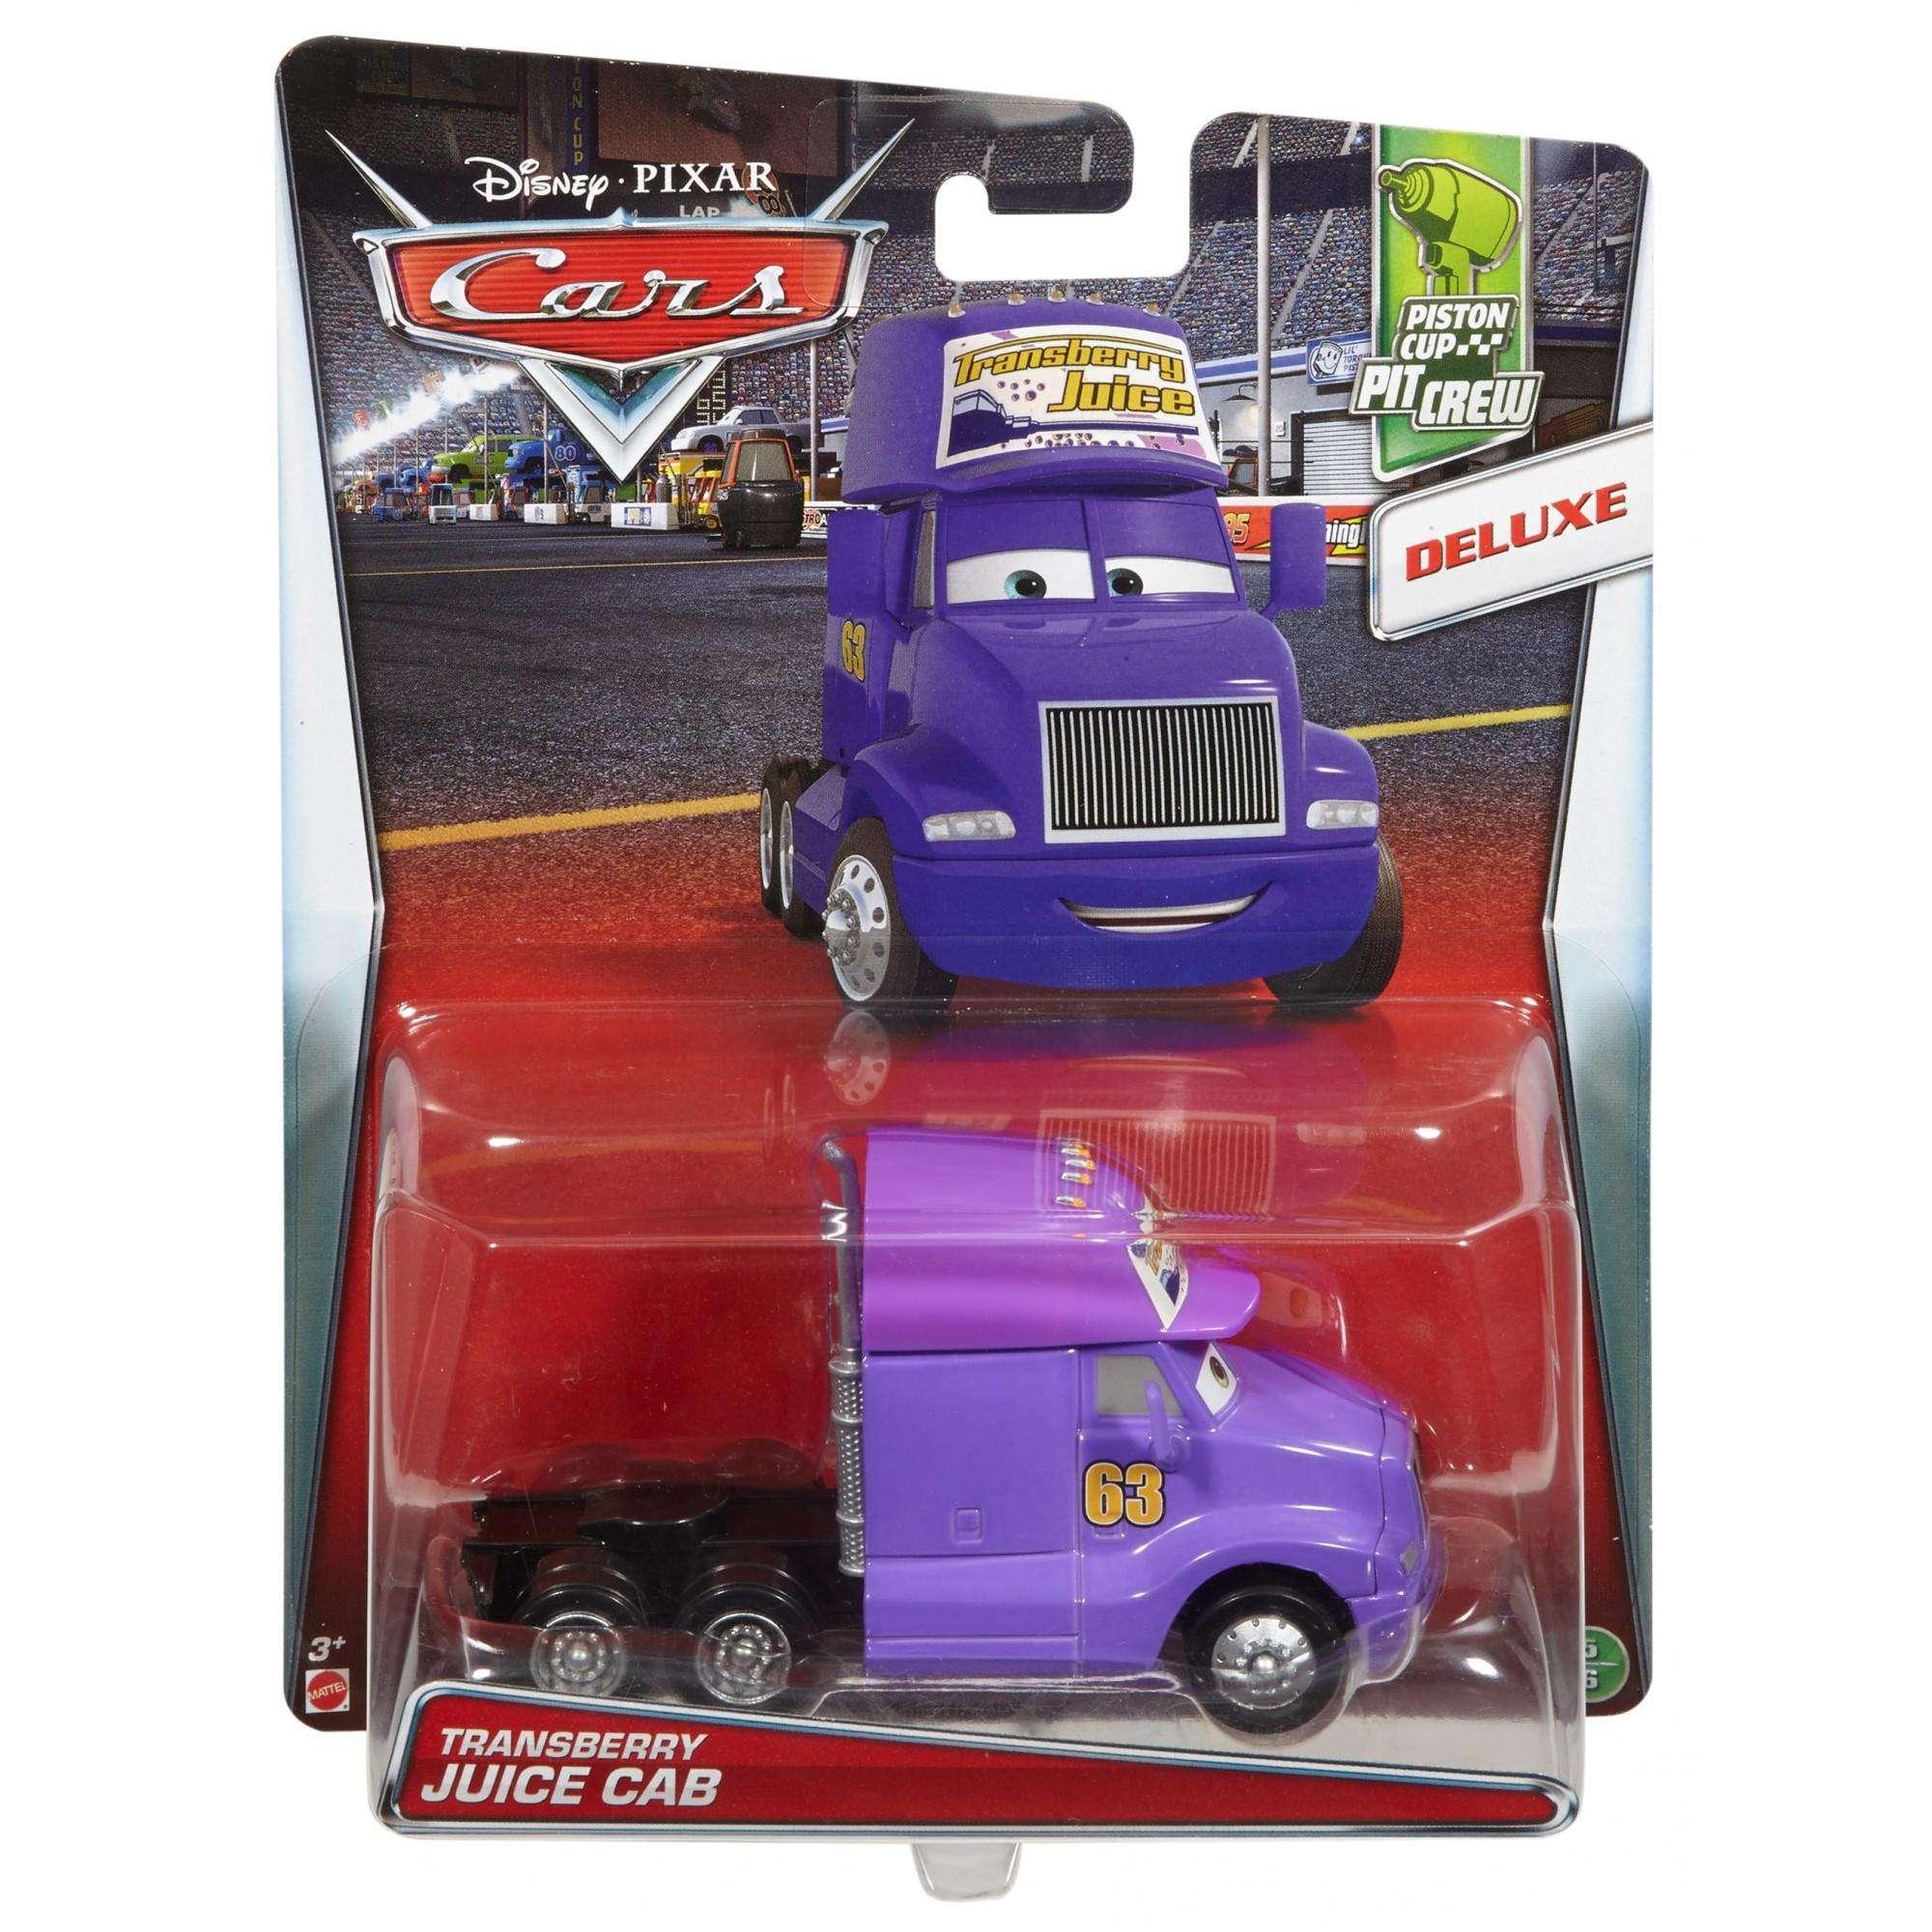 Disney/Pixar Cars Transberry Juice Cab Deluxe Die-Cast Vehicle - image 3 of 8